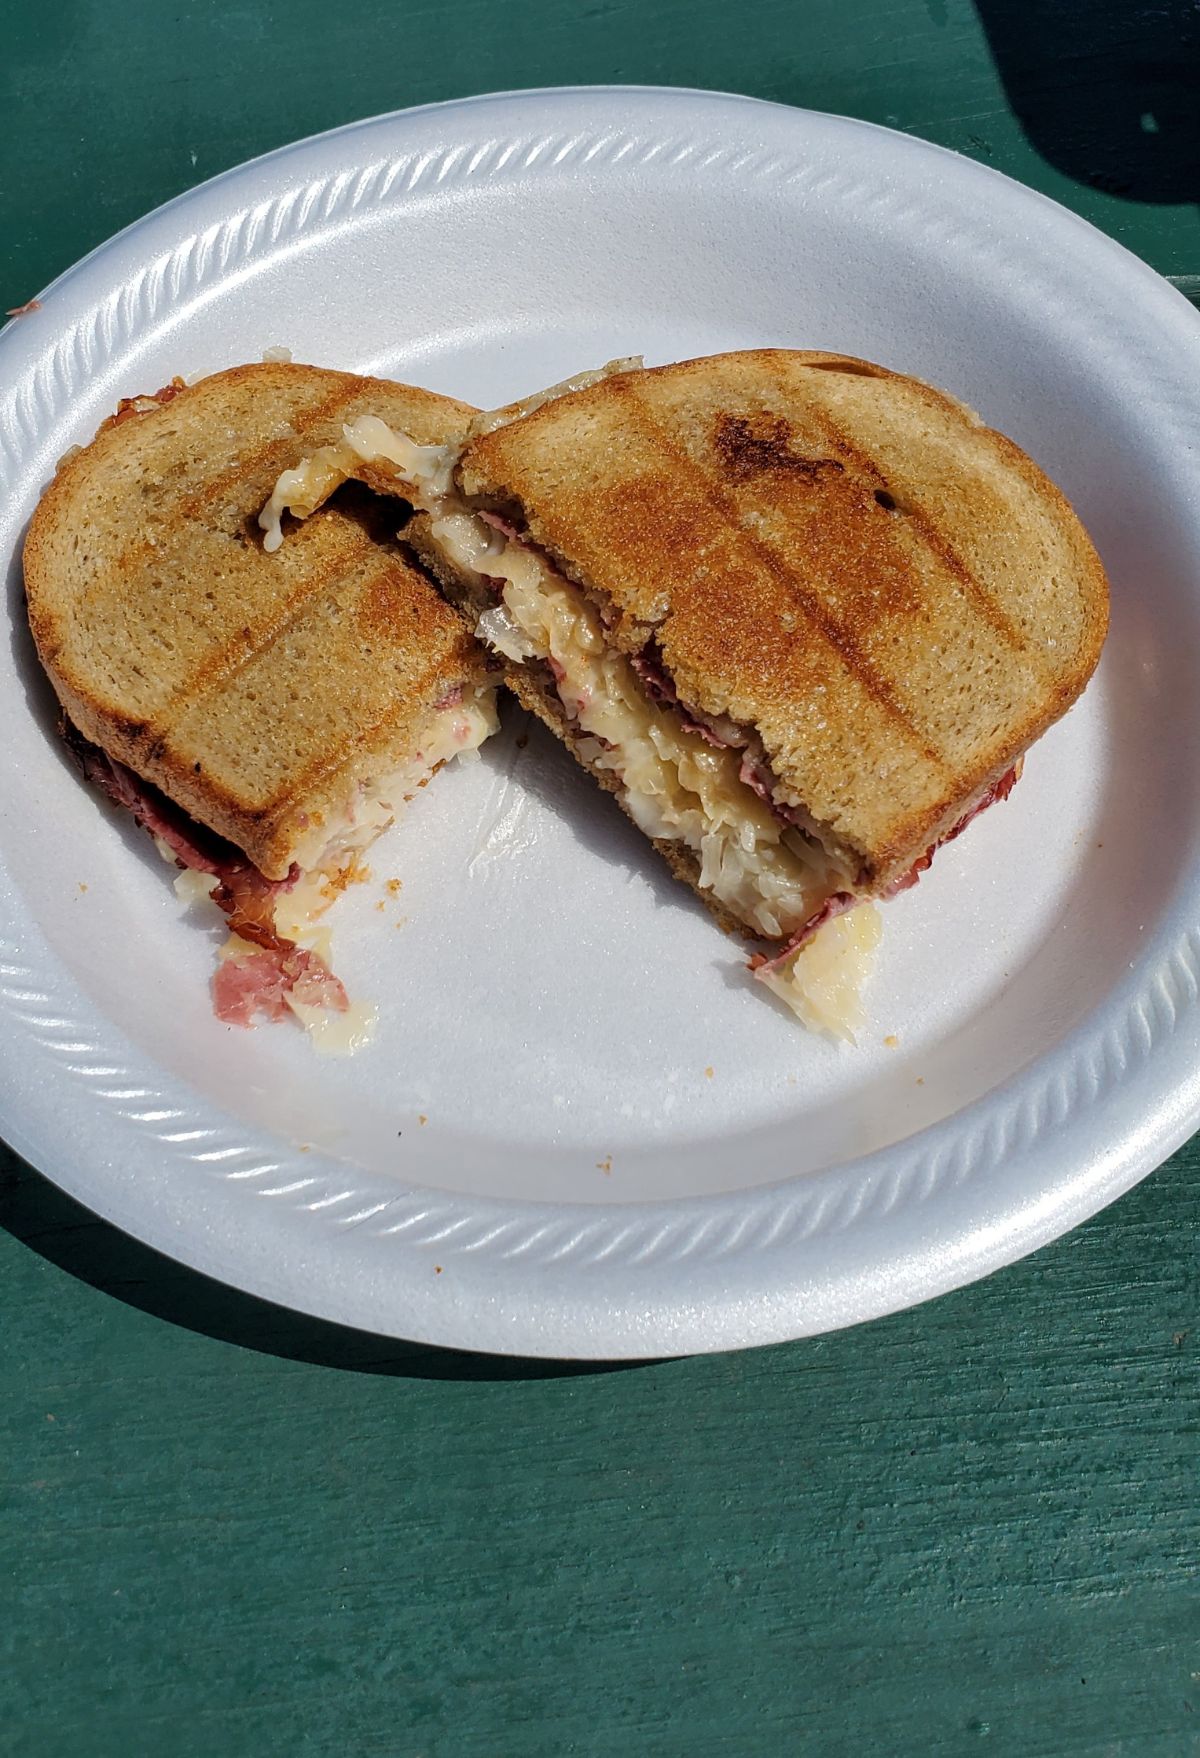 A Reuben sandwich on a paper plate.